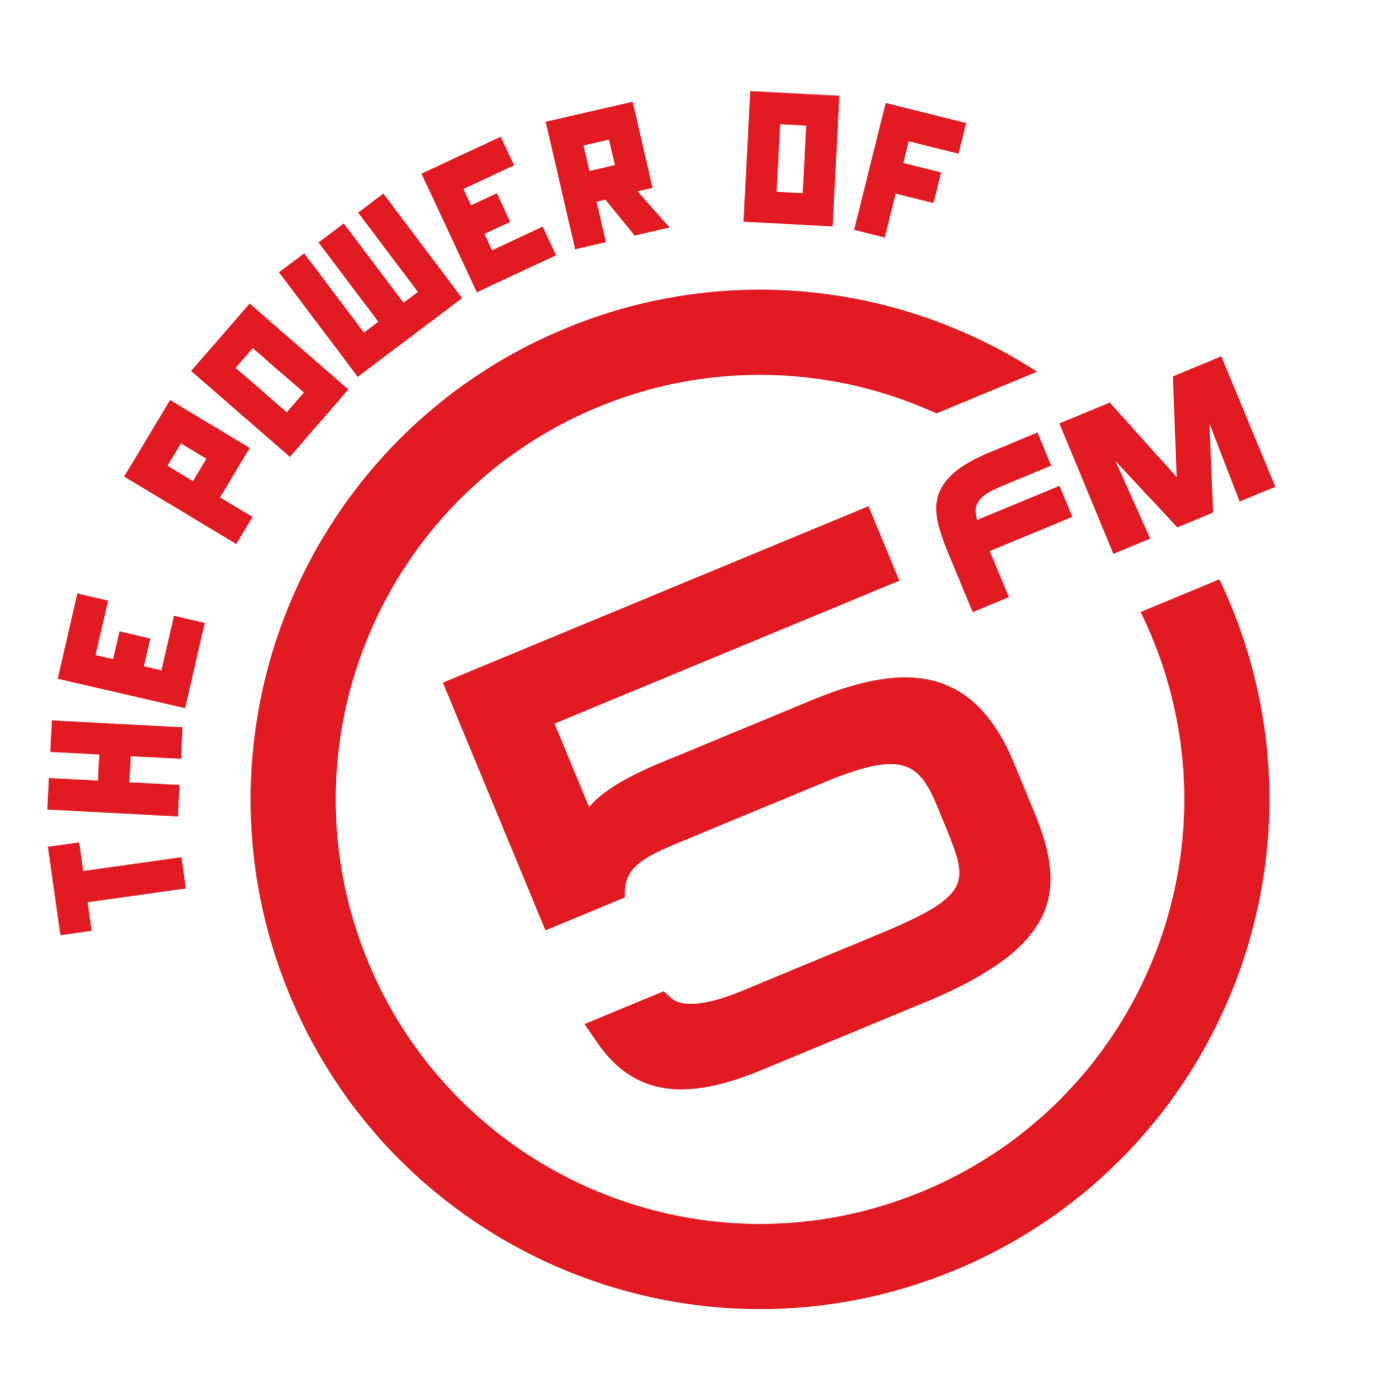 5FM LEGENDS HOWIE COMBRINK (19 MAR)